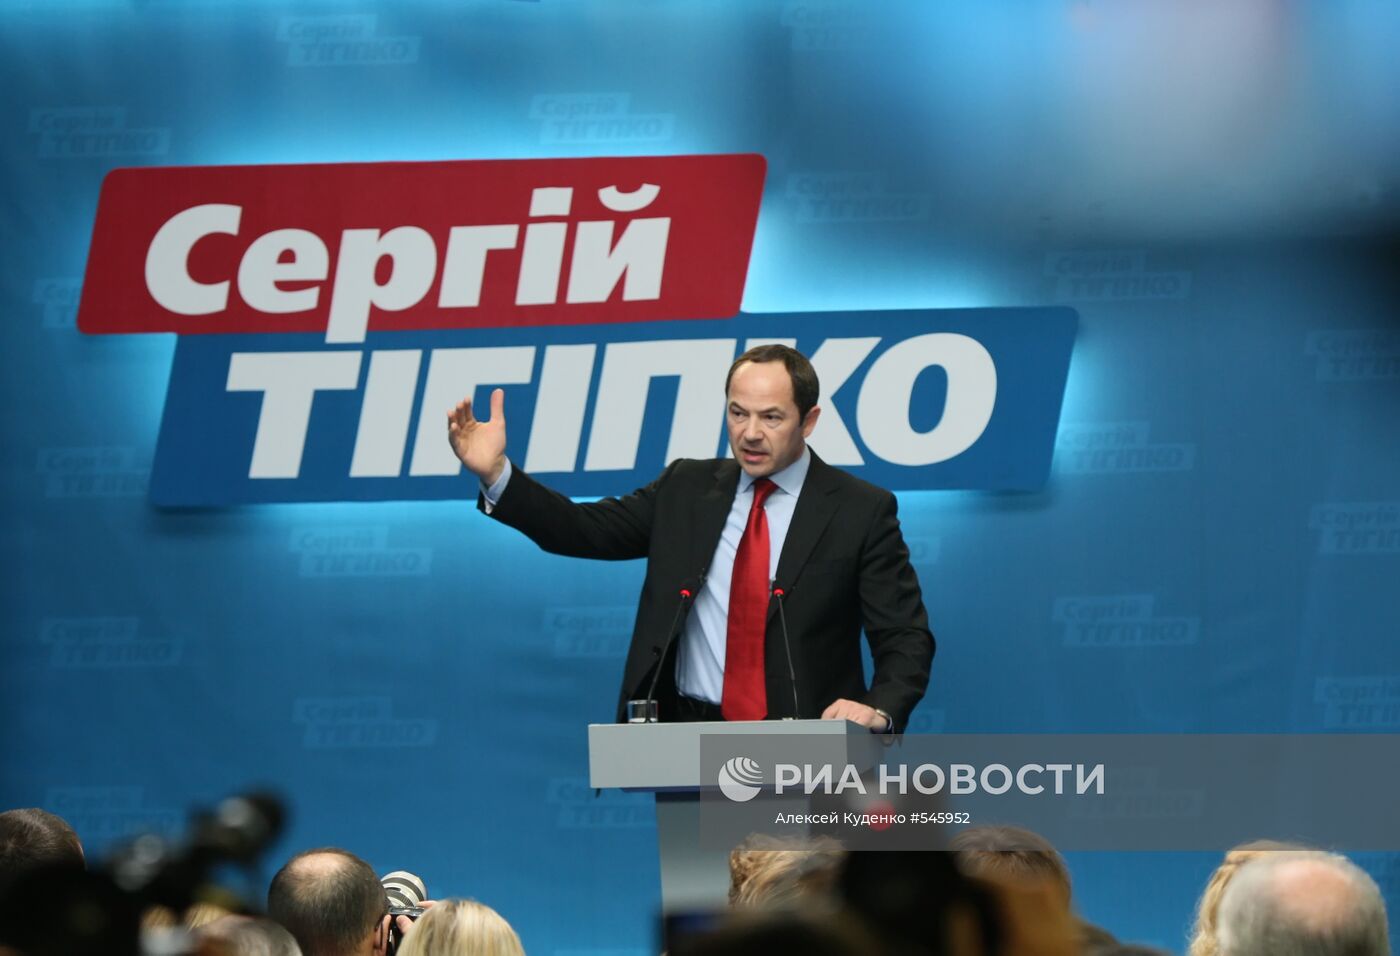 Пресс-конференция Сергея Тигипко